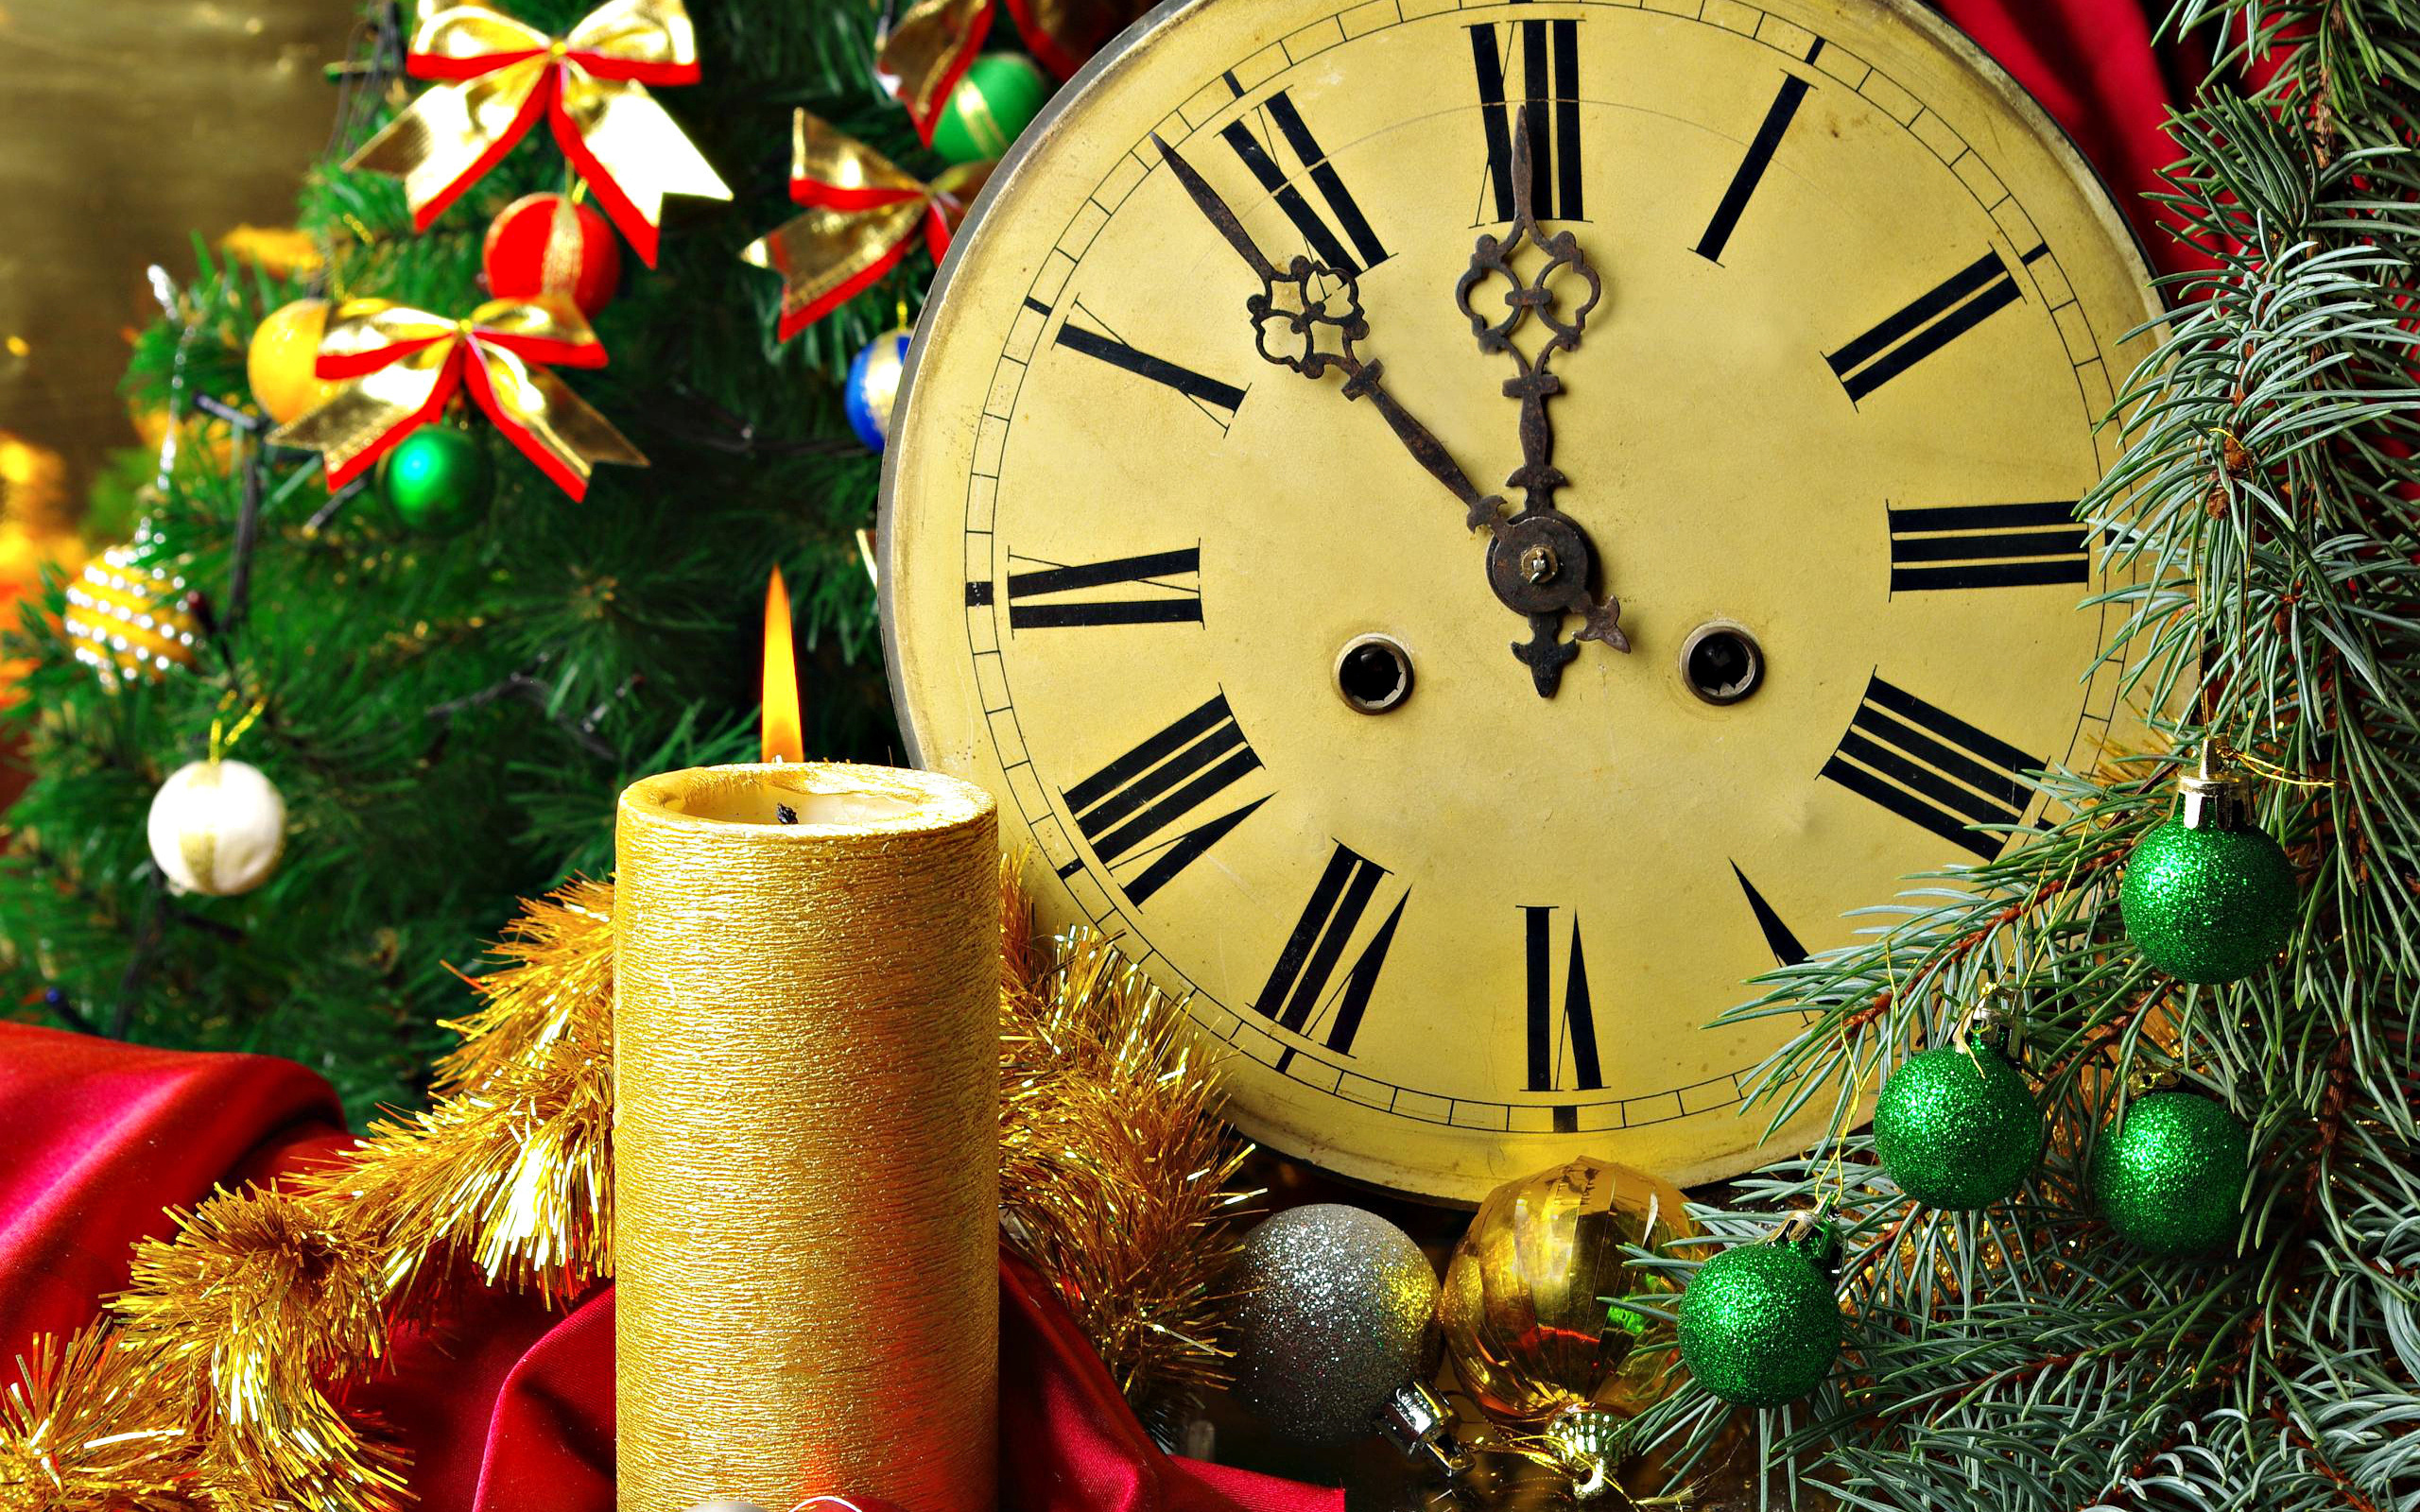 Часы двенадцать бьют на Новый год 2015